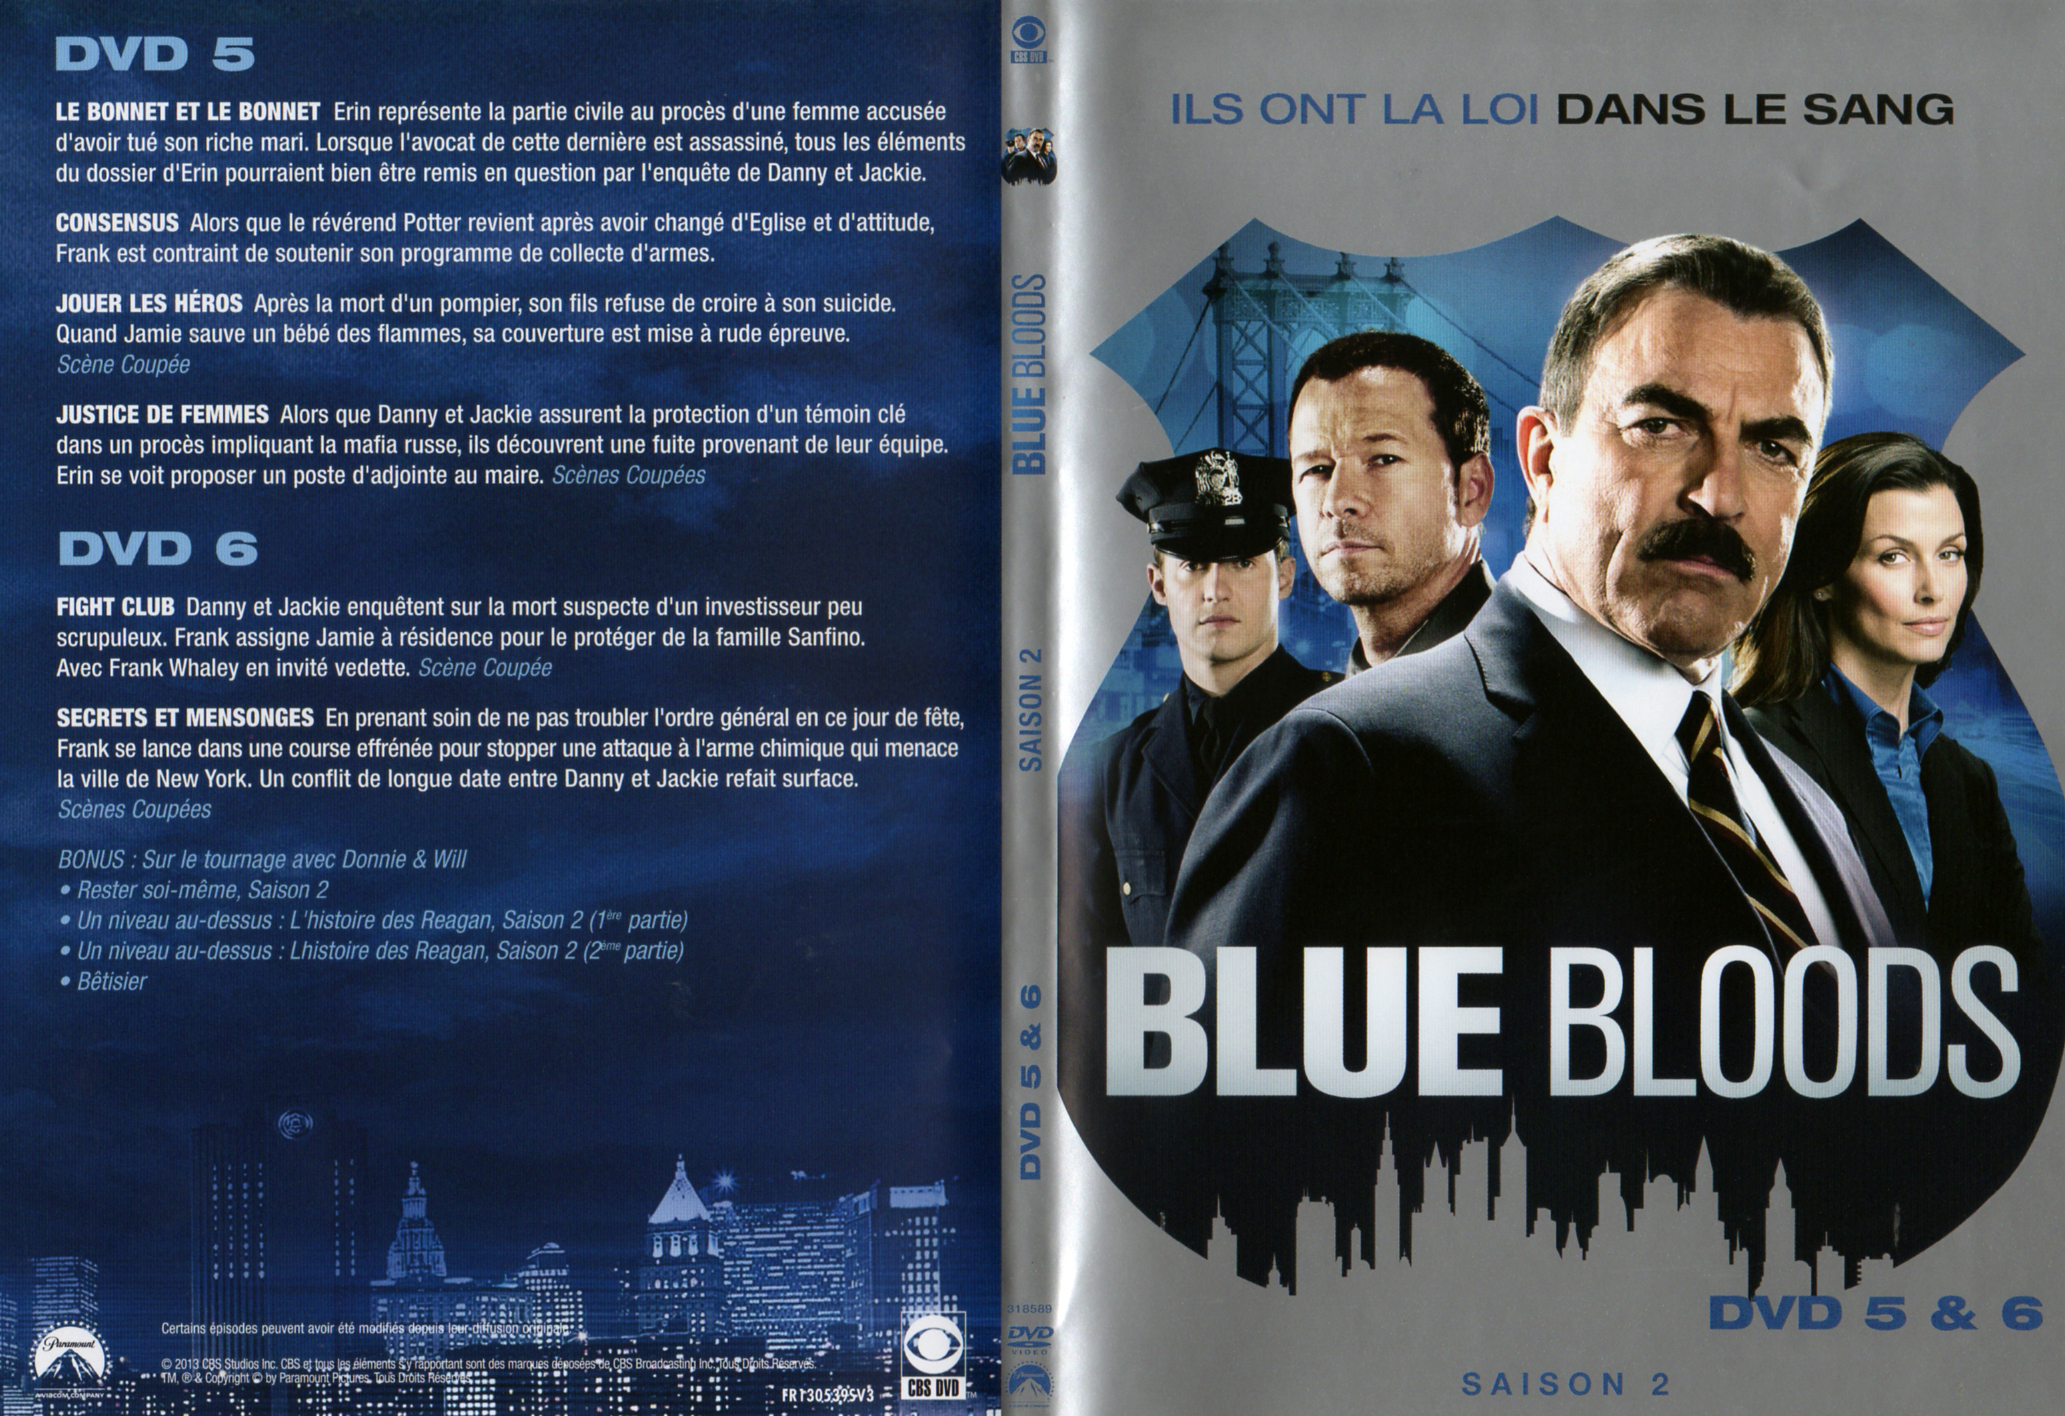 Jaquette DVD Blue Bloods Saison 2 DVD 3